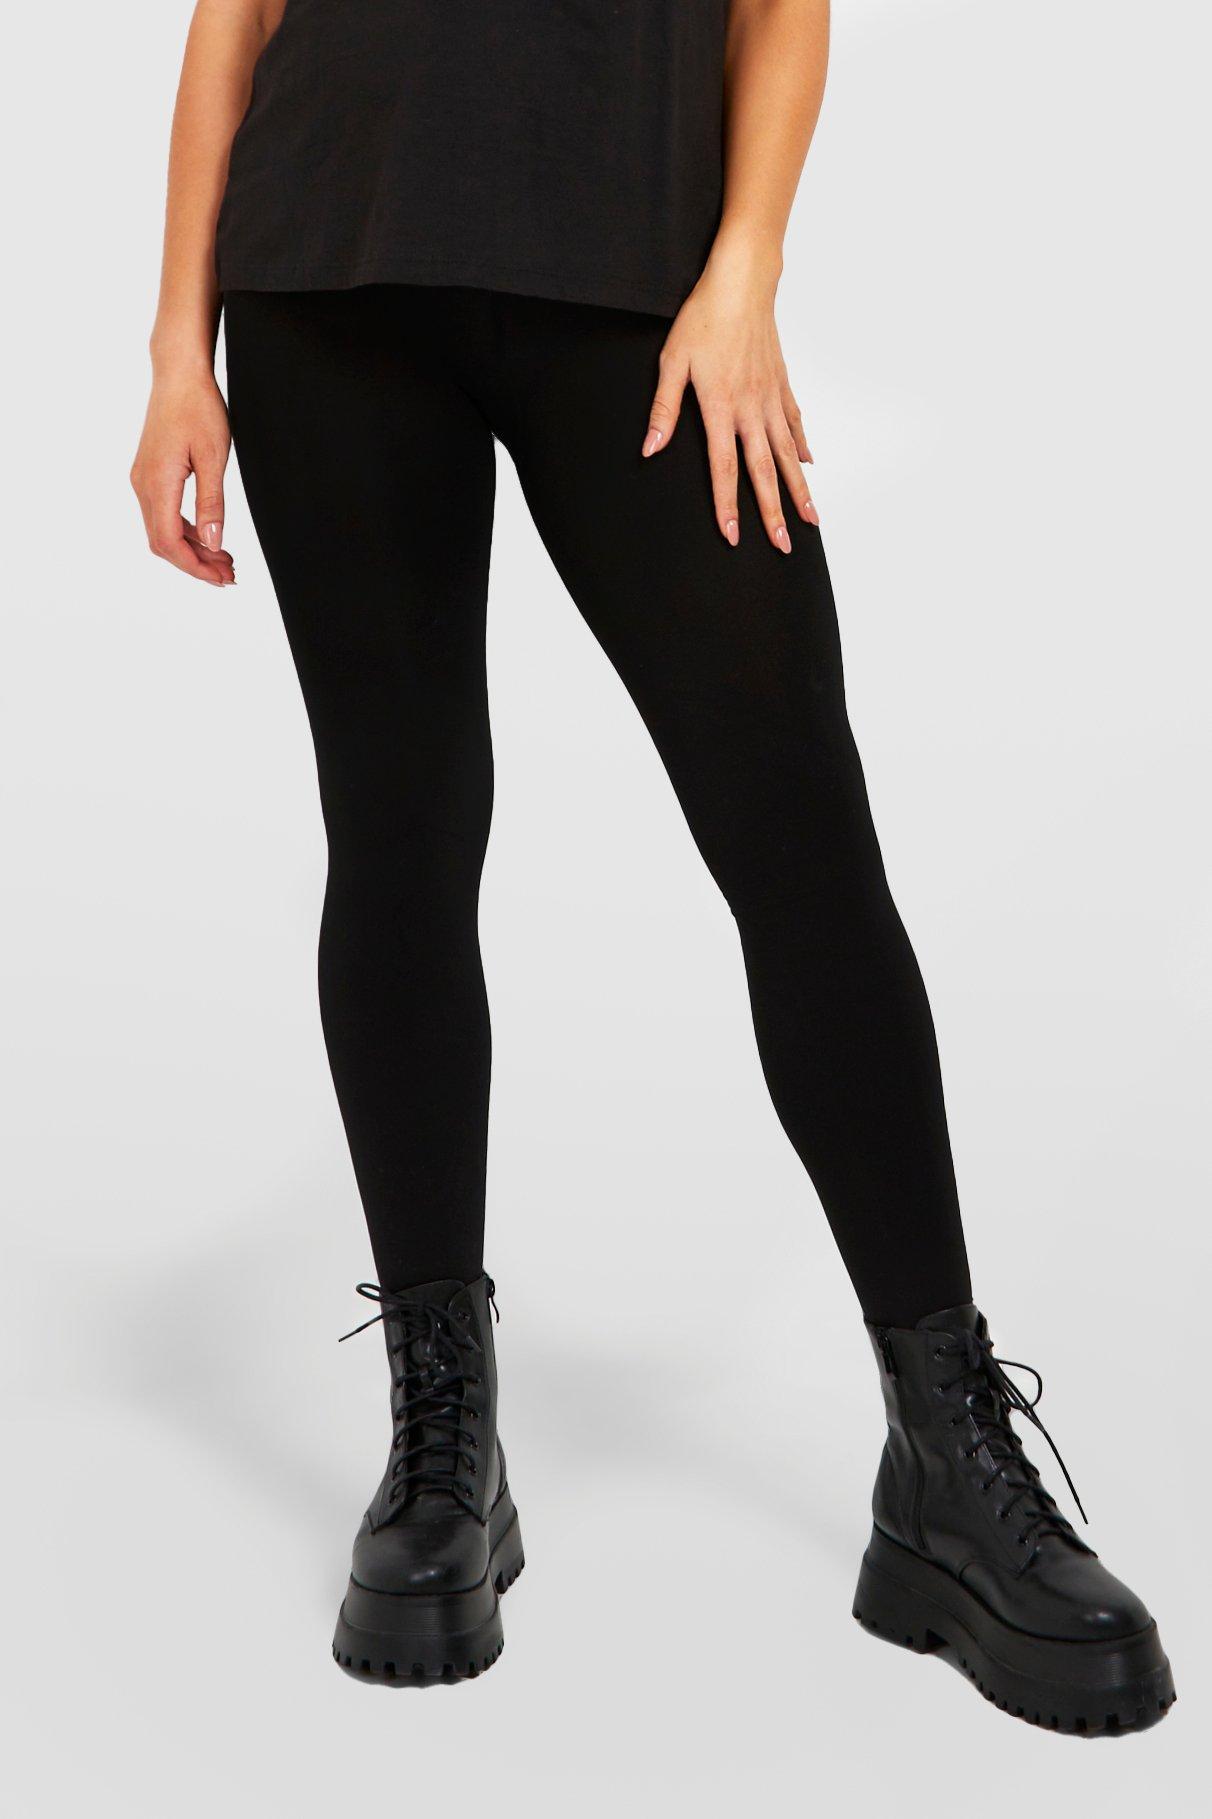 Thermal leggings with fur, black LEGGINGS THERMO LEGS 665, Black, L/XL 